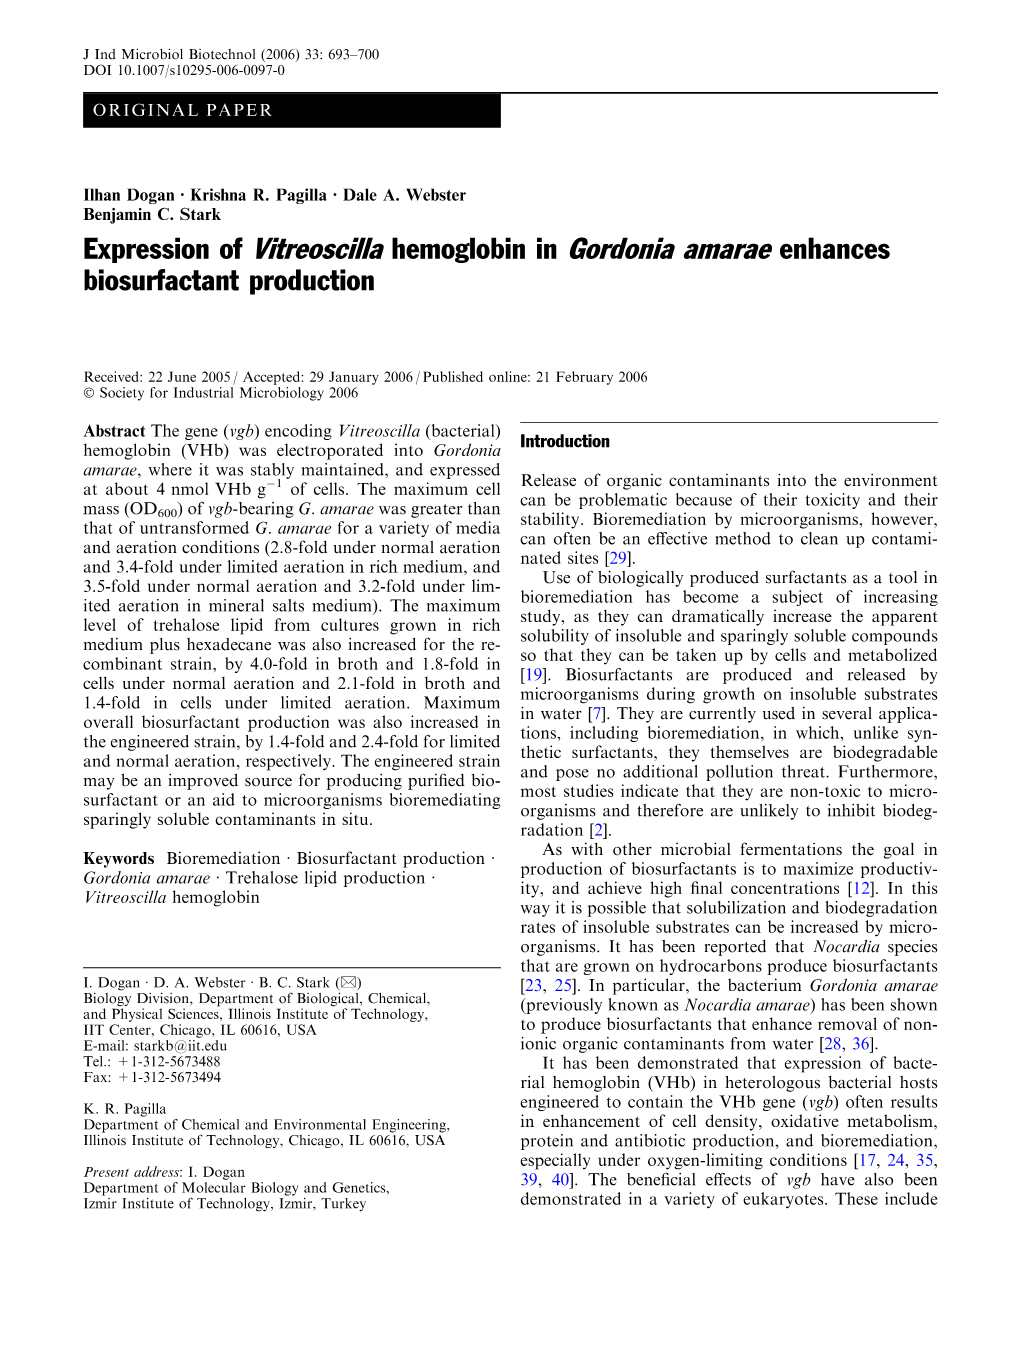 Expression of Vitreoscilla Hemoglobin in Gordonia Amarae Enhances Biosurfactant Production